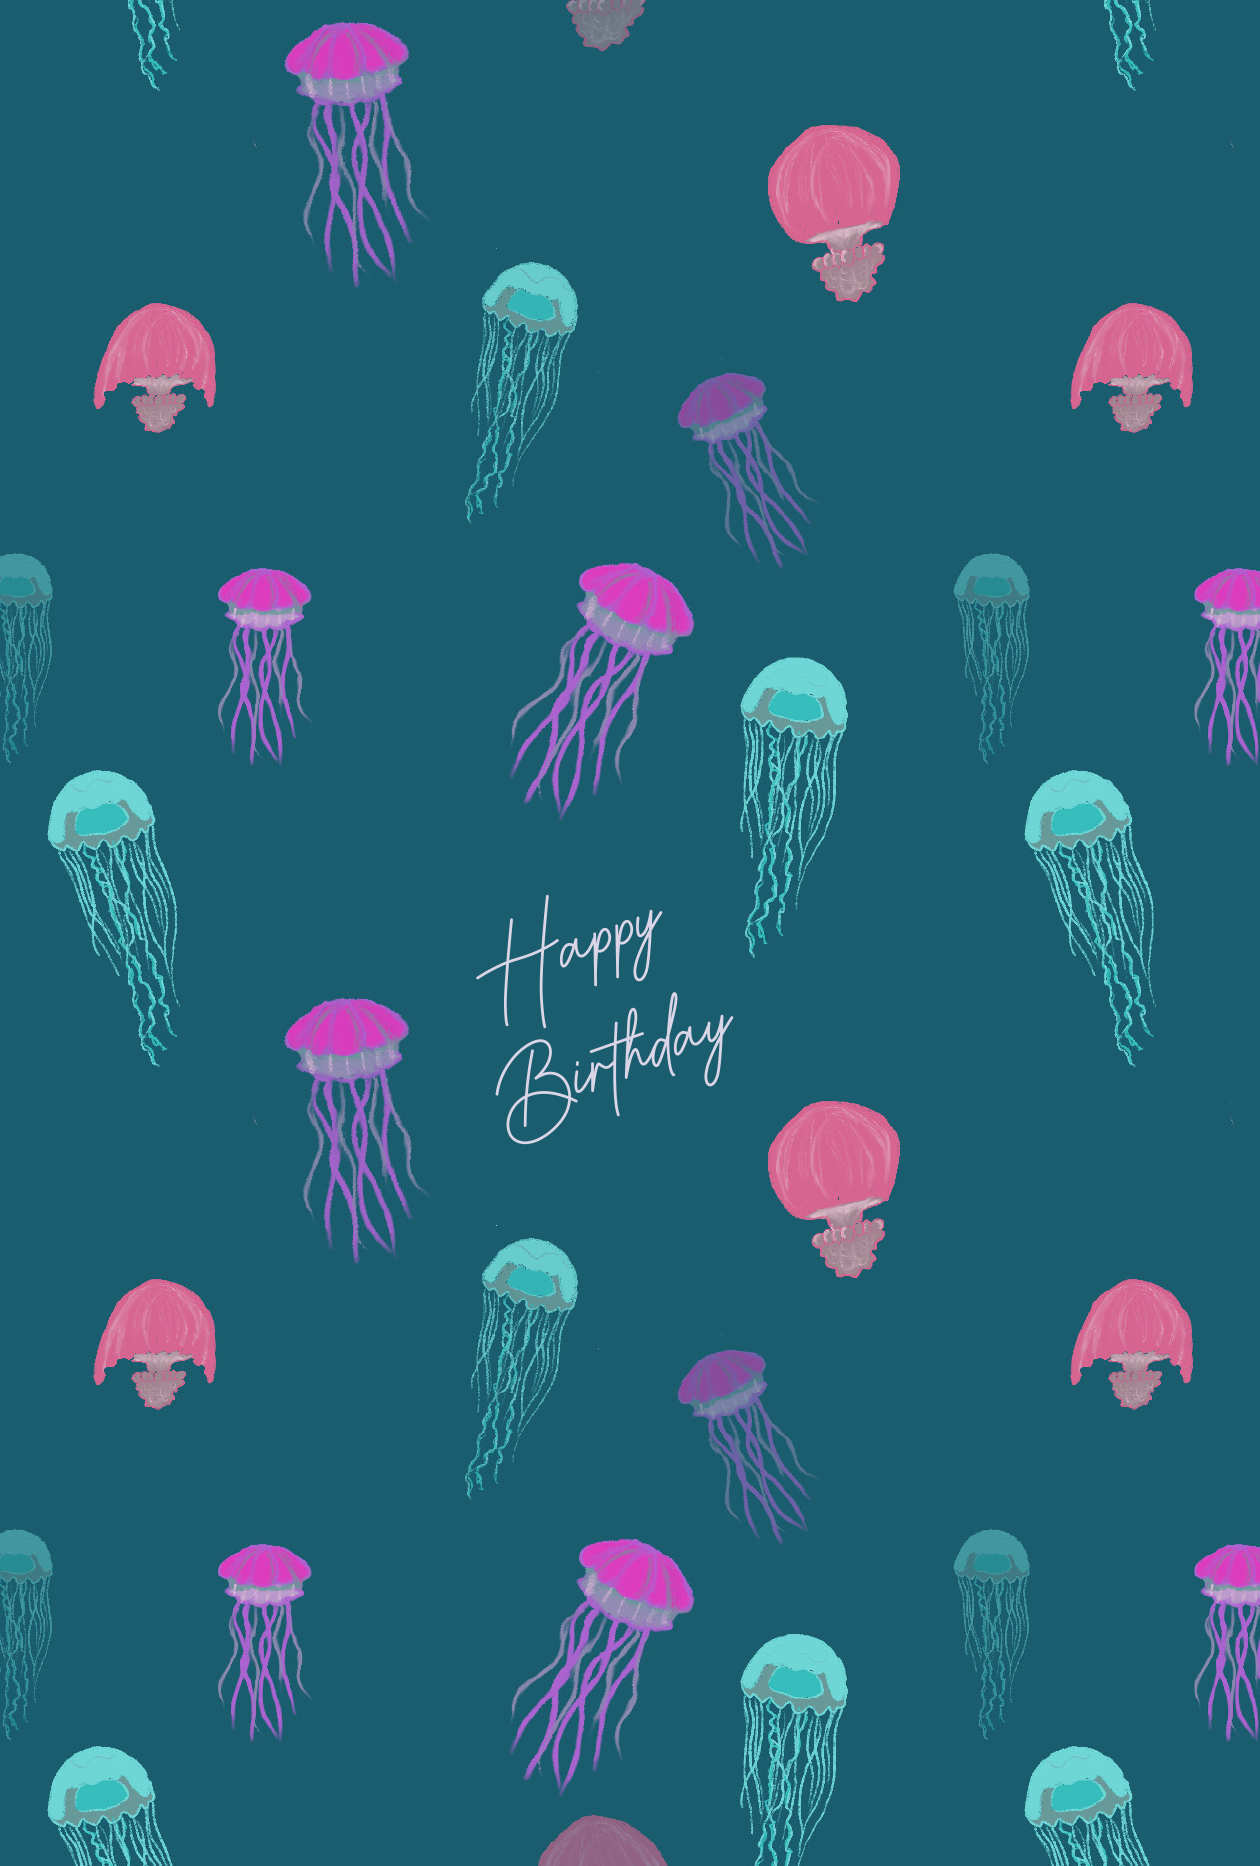 Jellyfish Card